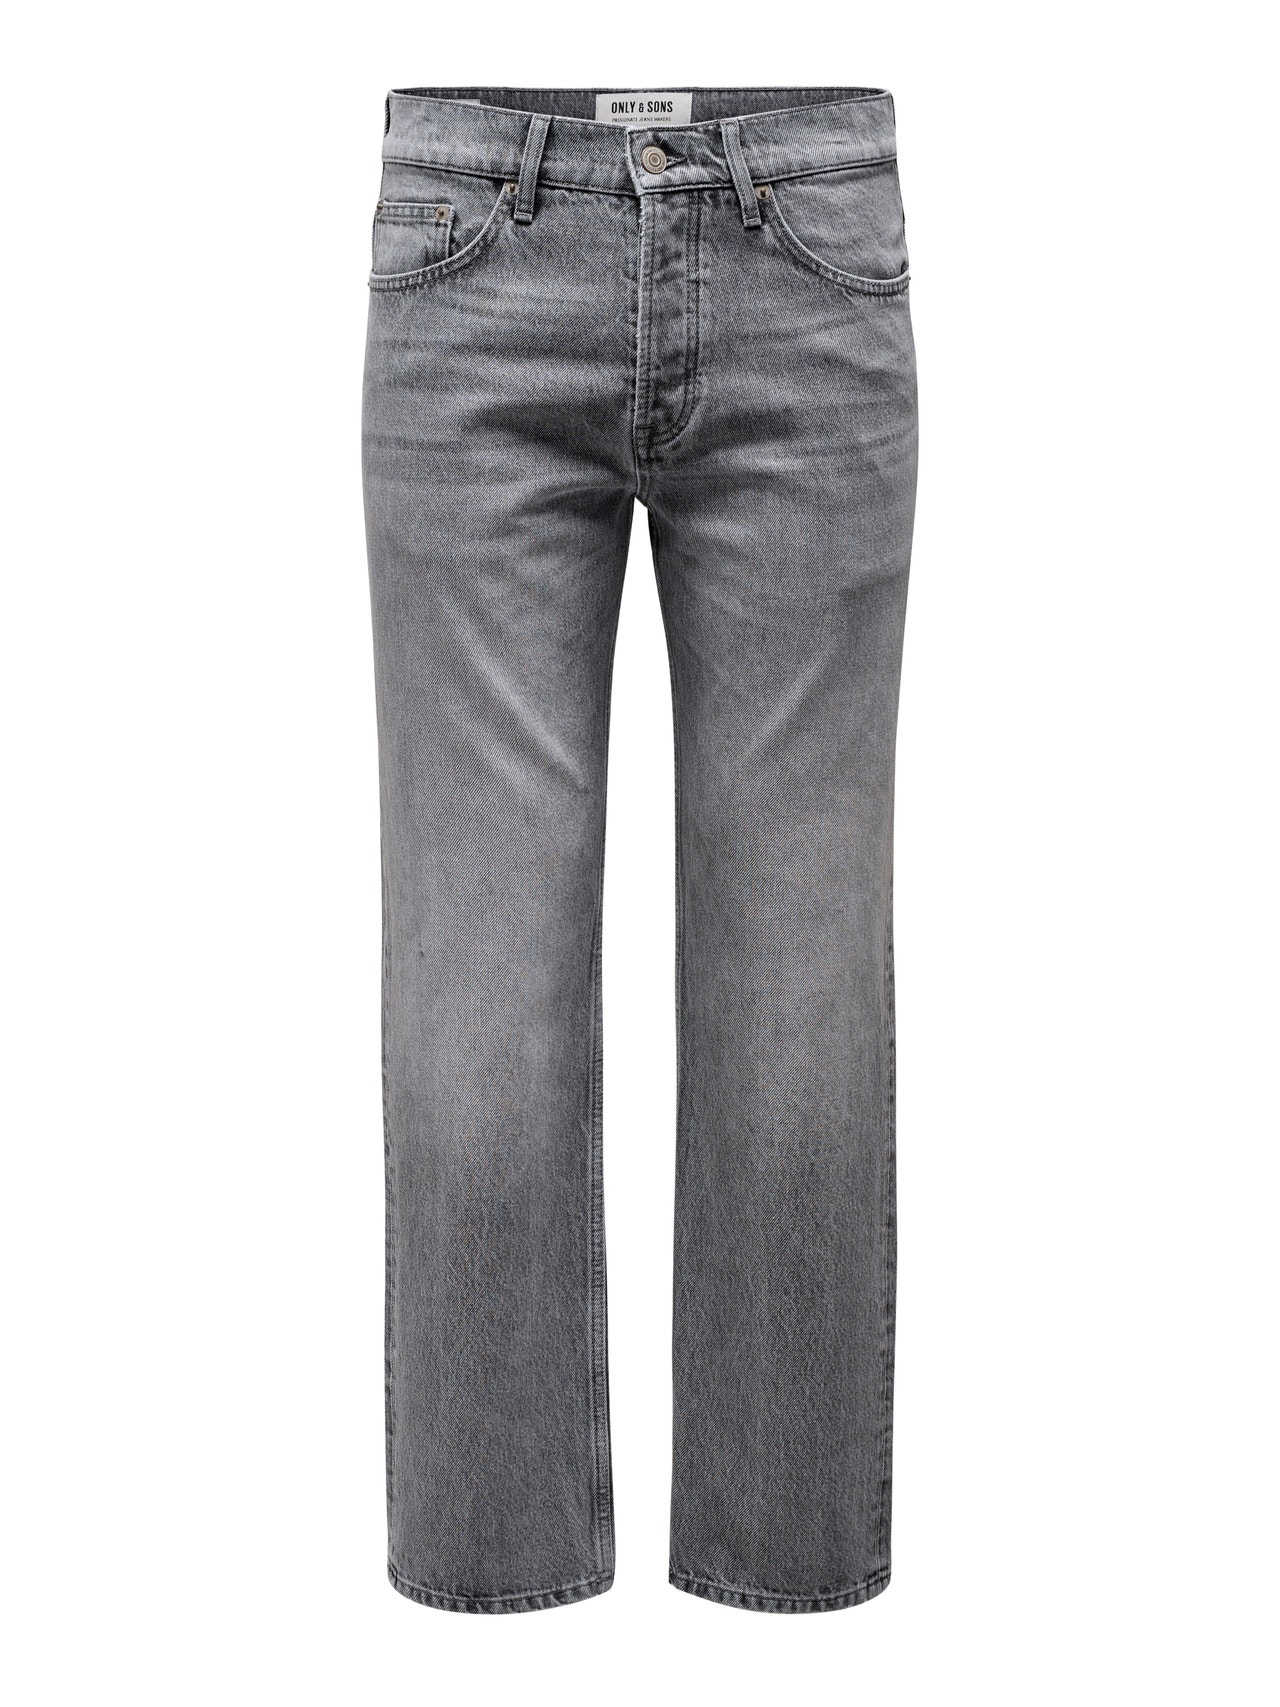 ONLY & SONS Gerade geschnitten Mid Rise Jeans -Medium Grey Denim - 22028202